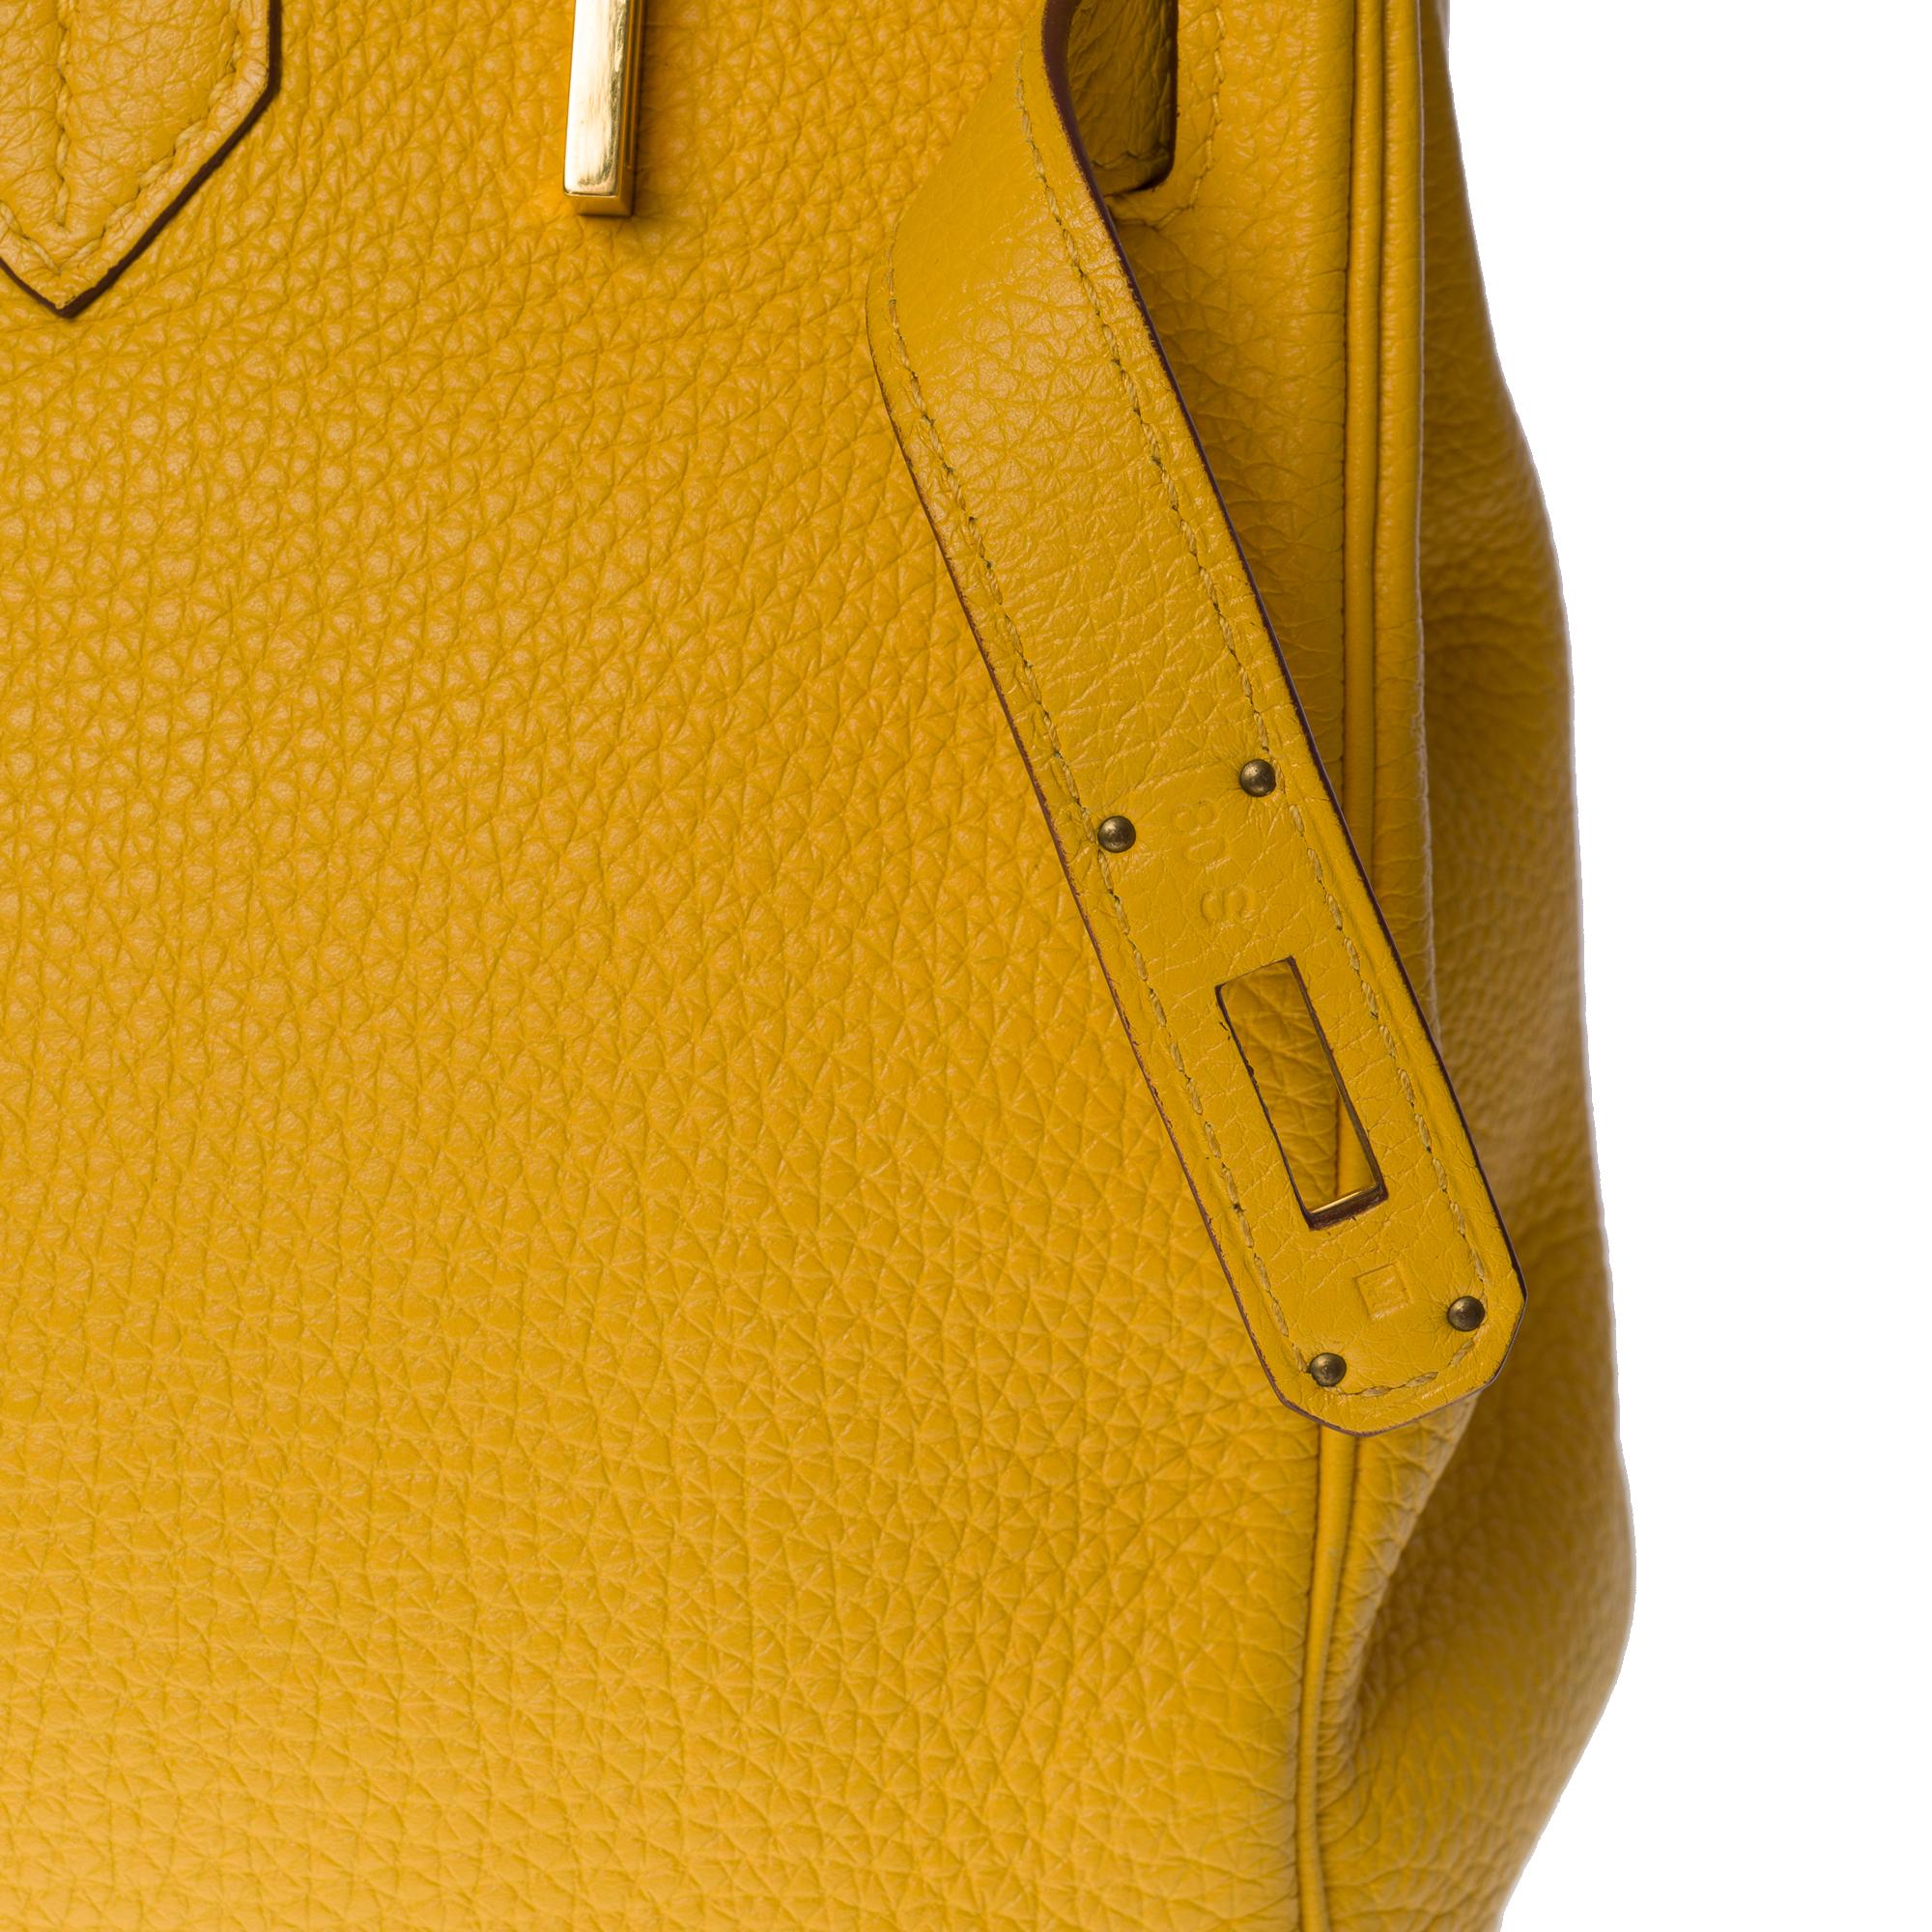 Amazing & Bright Hermès Birkin 30 handbag in Yellow Togo leather, GHW For Sale 3